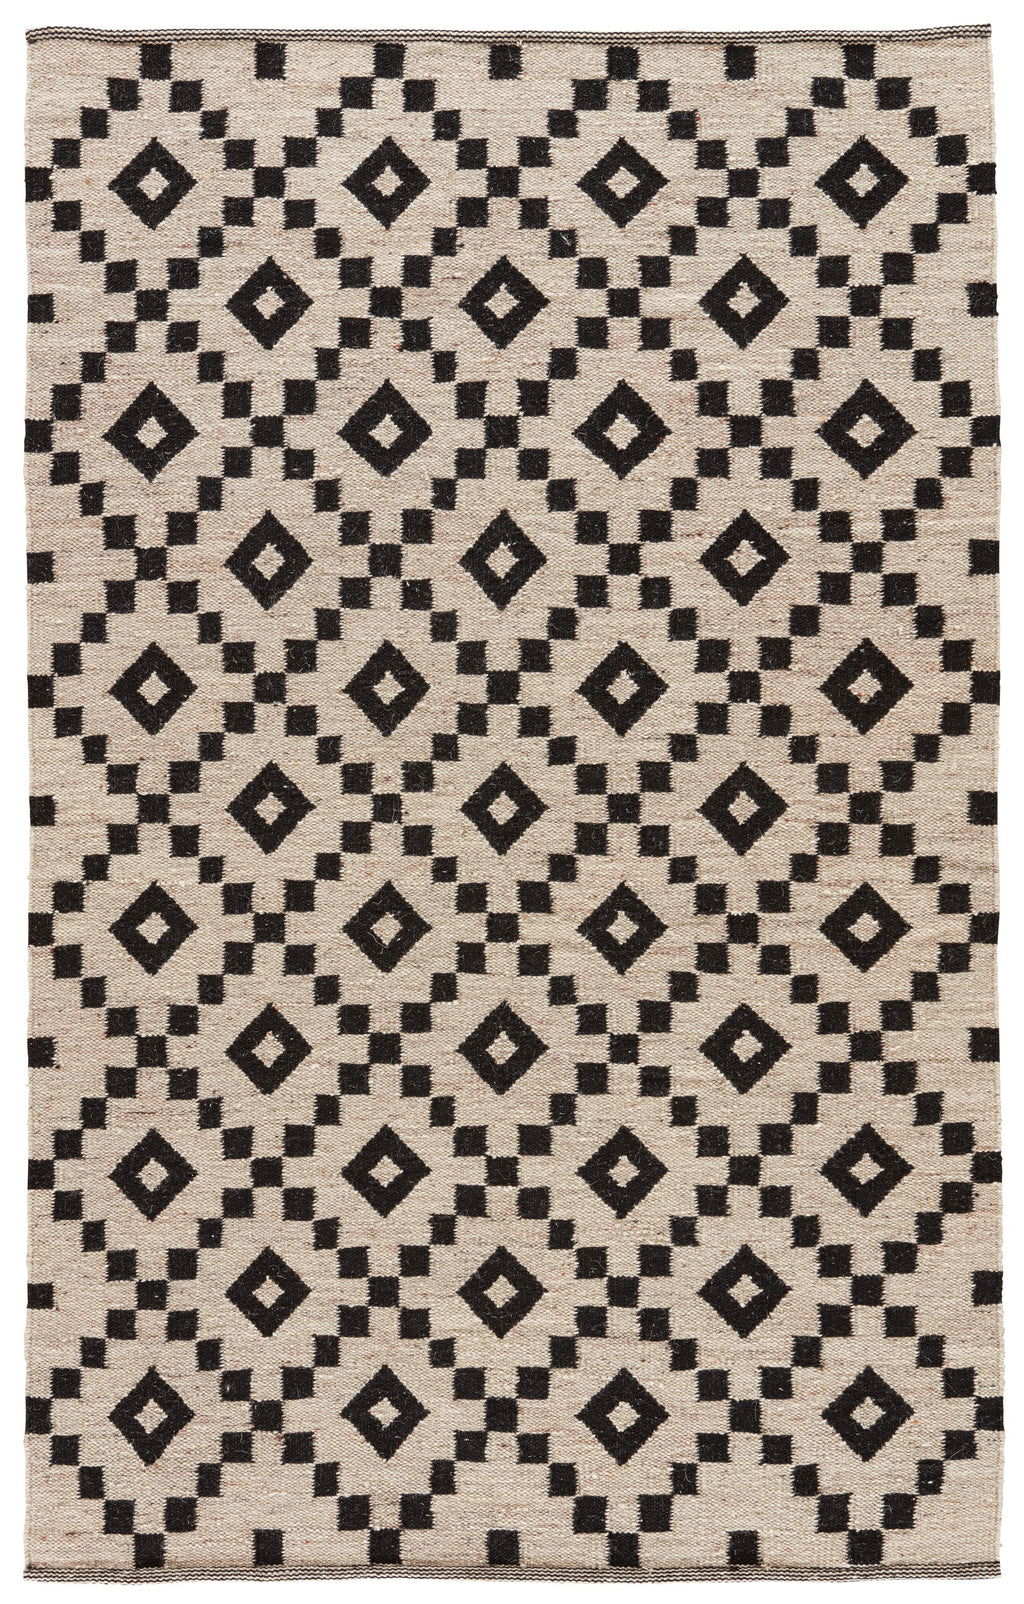 croix geometric rug in turtledove jet black design by jaipur 1